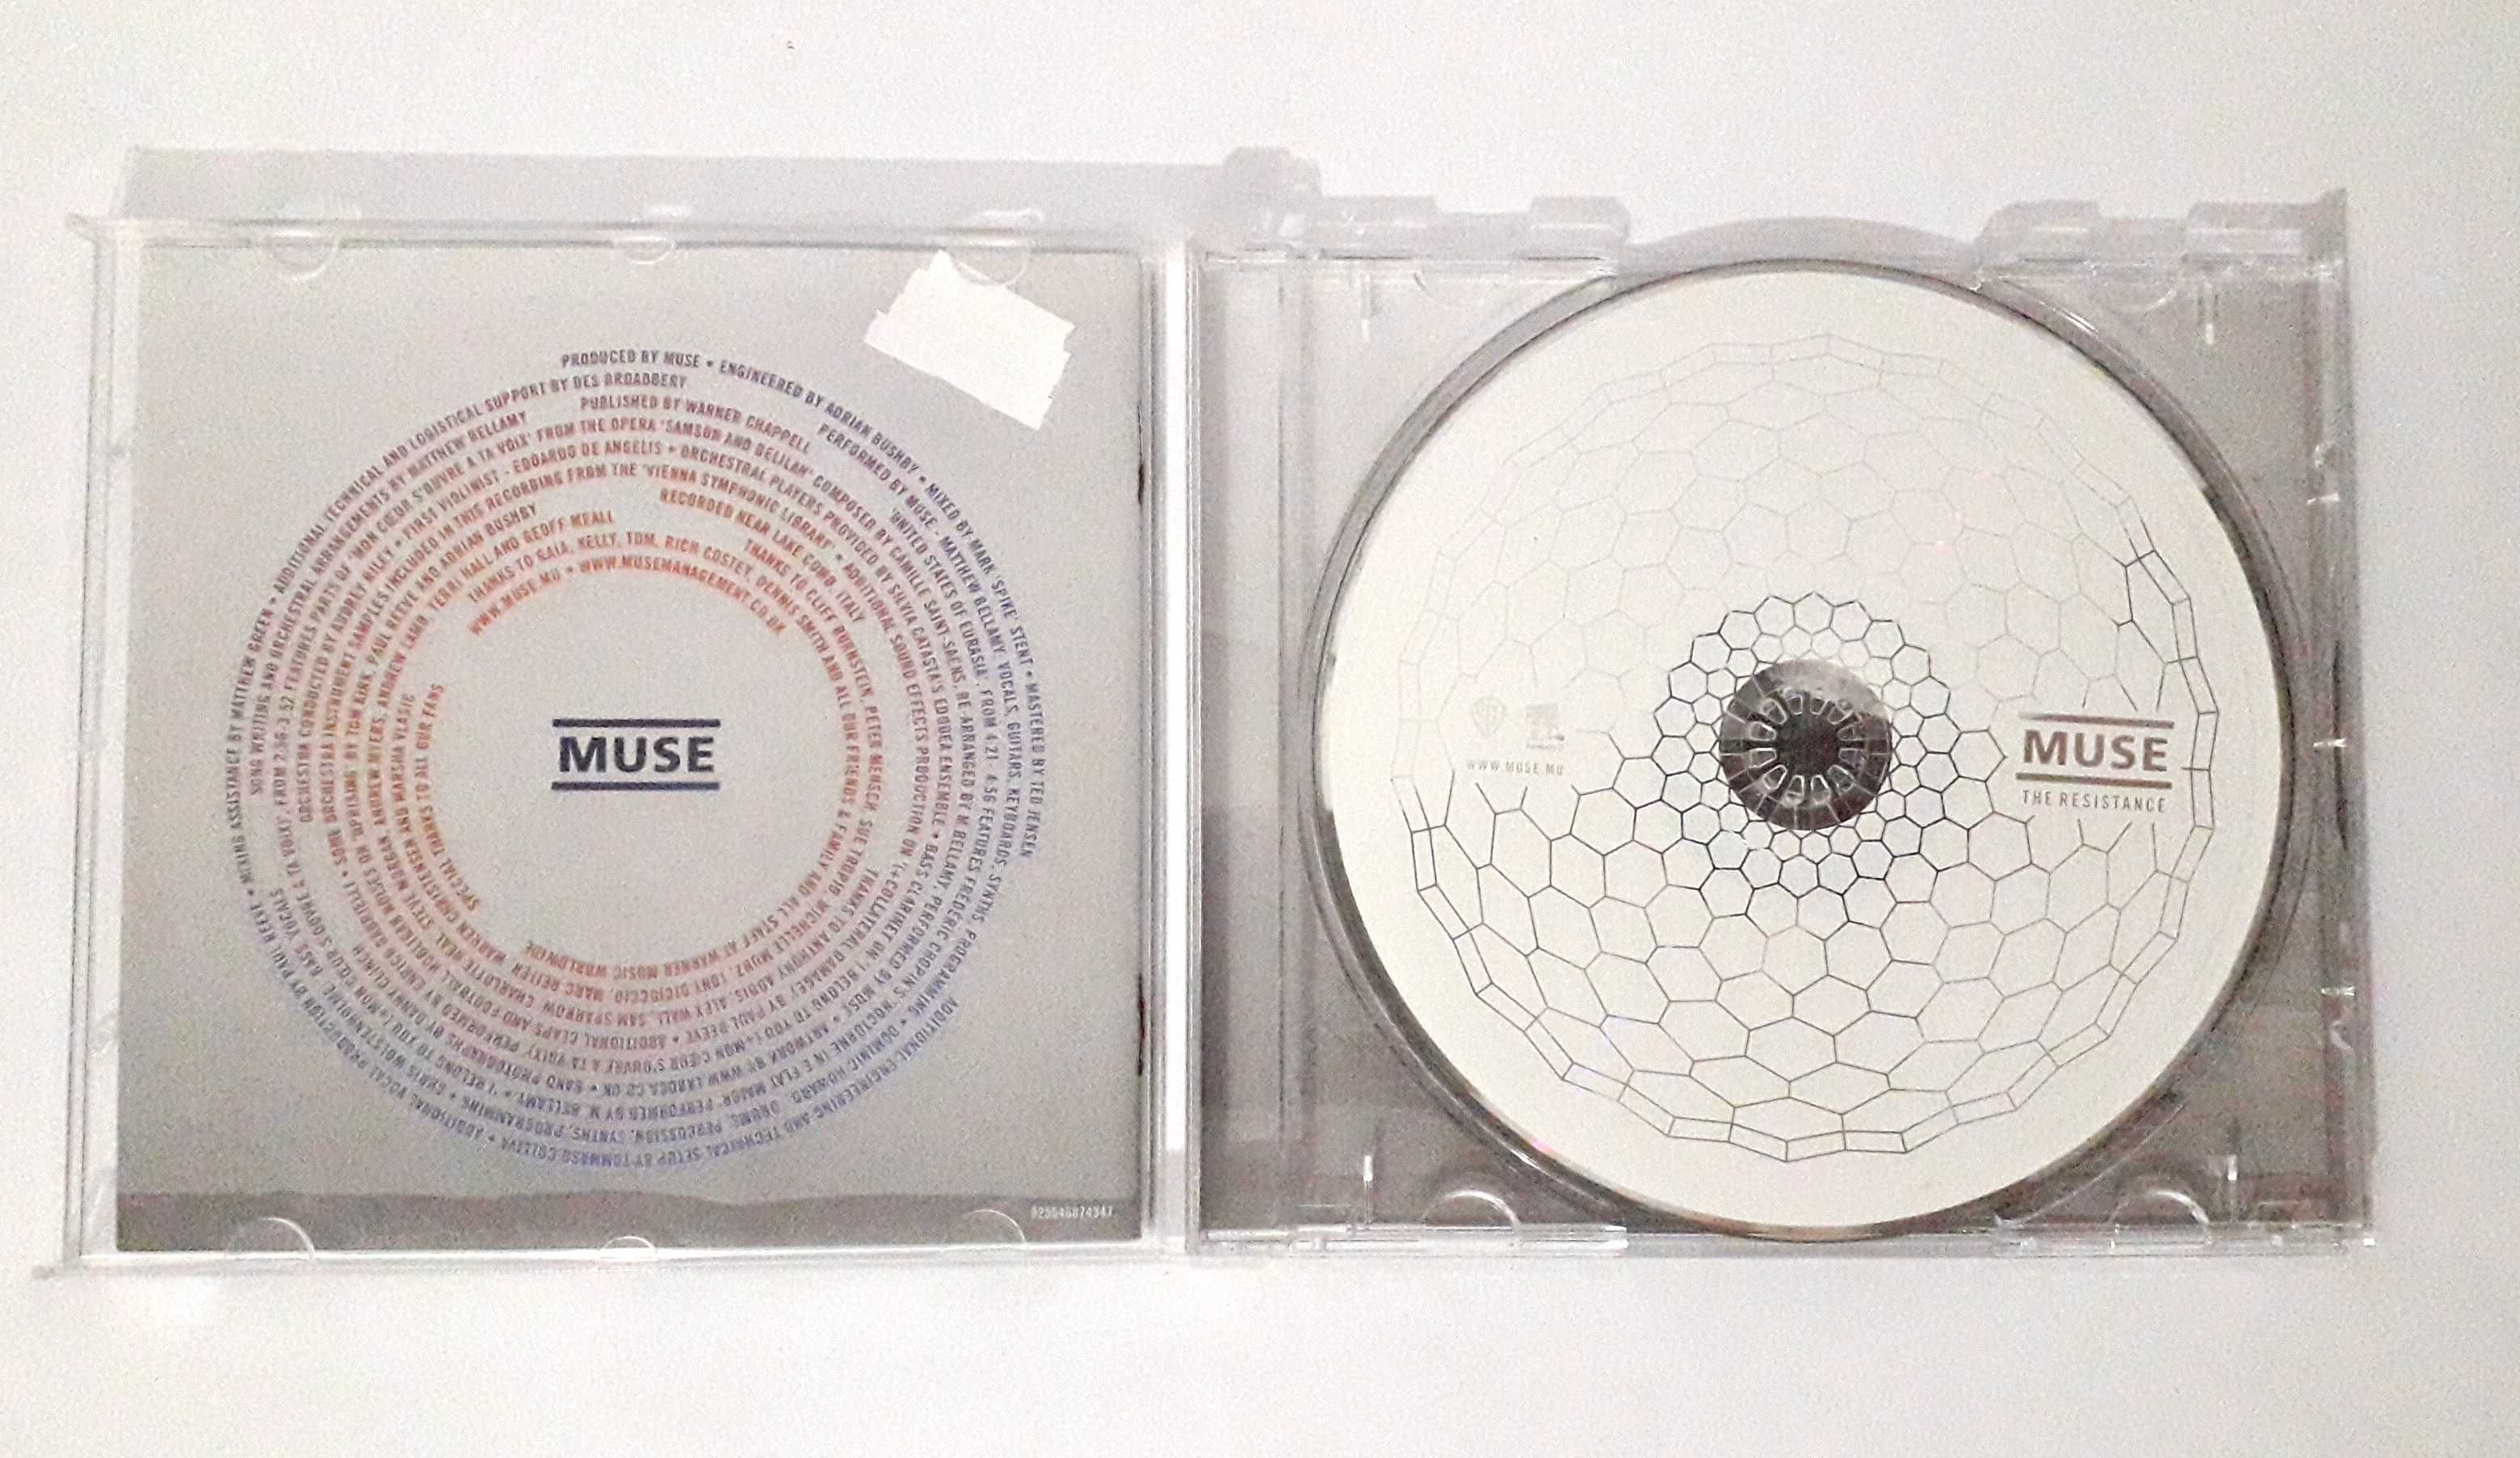 CDs Música usados: Evanescence, Manic Street Preachers, Muse - Set 3